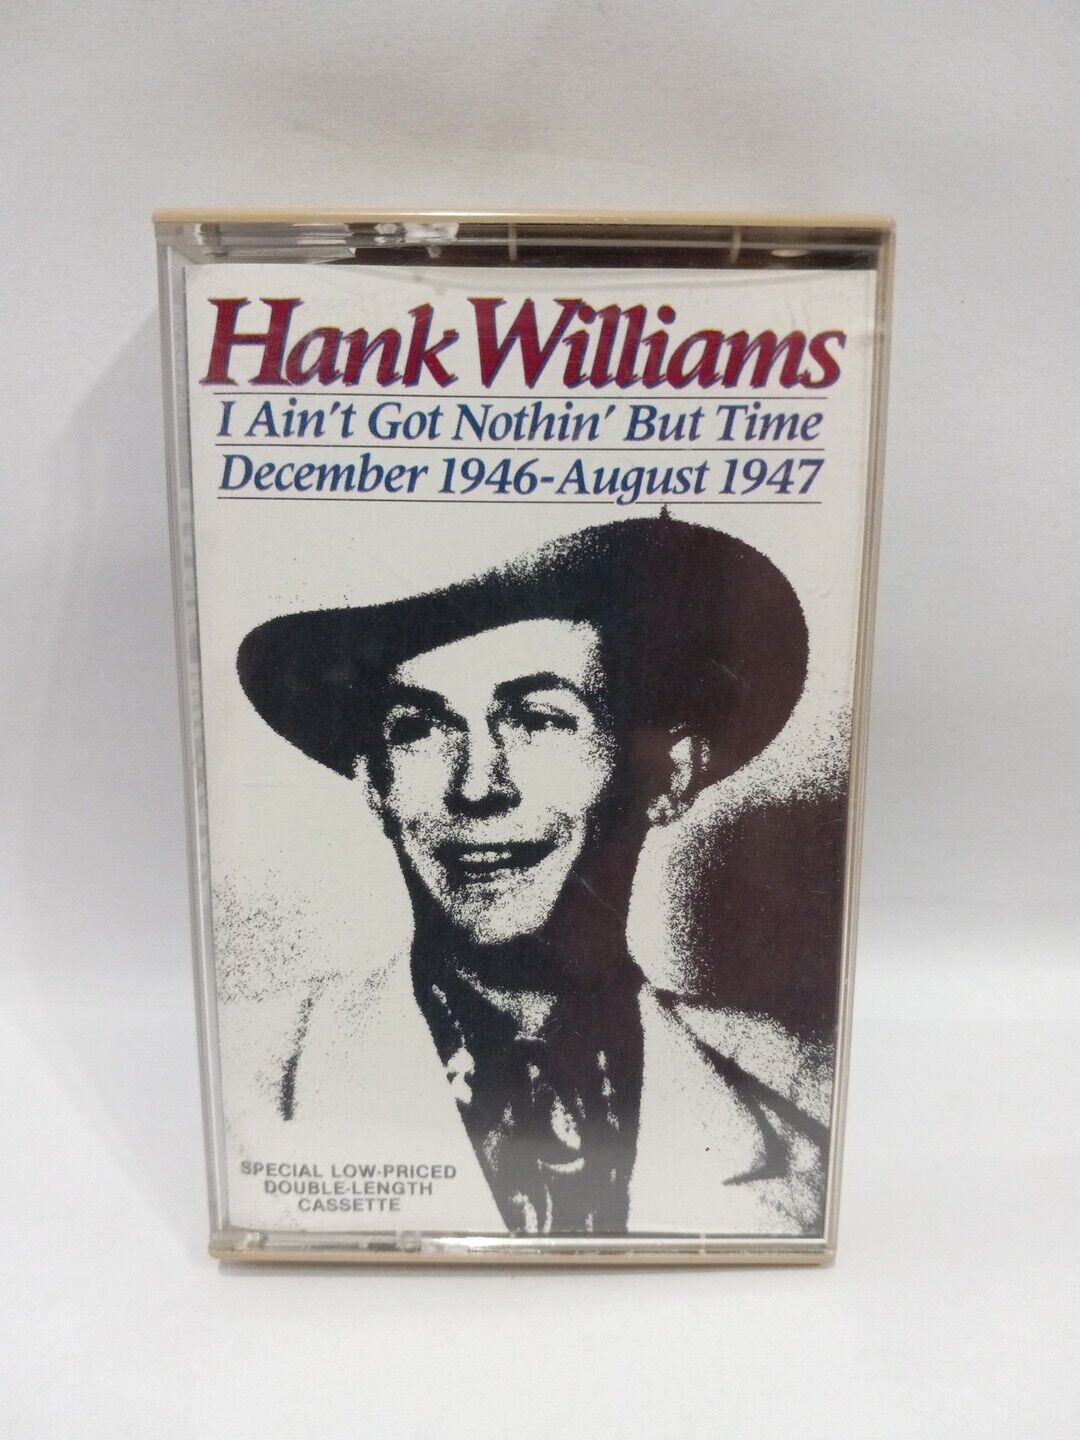 HANK WILLIAMS - I AIN\'T GOT NOTHIN\' BUT TIME DEC 1946 - AUG 1947 CASSETTE TAPE